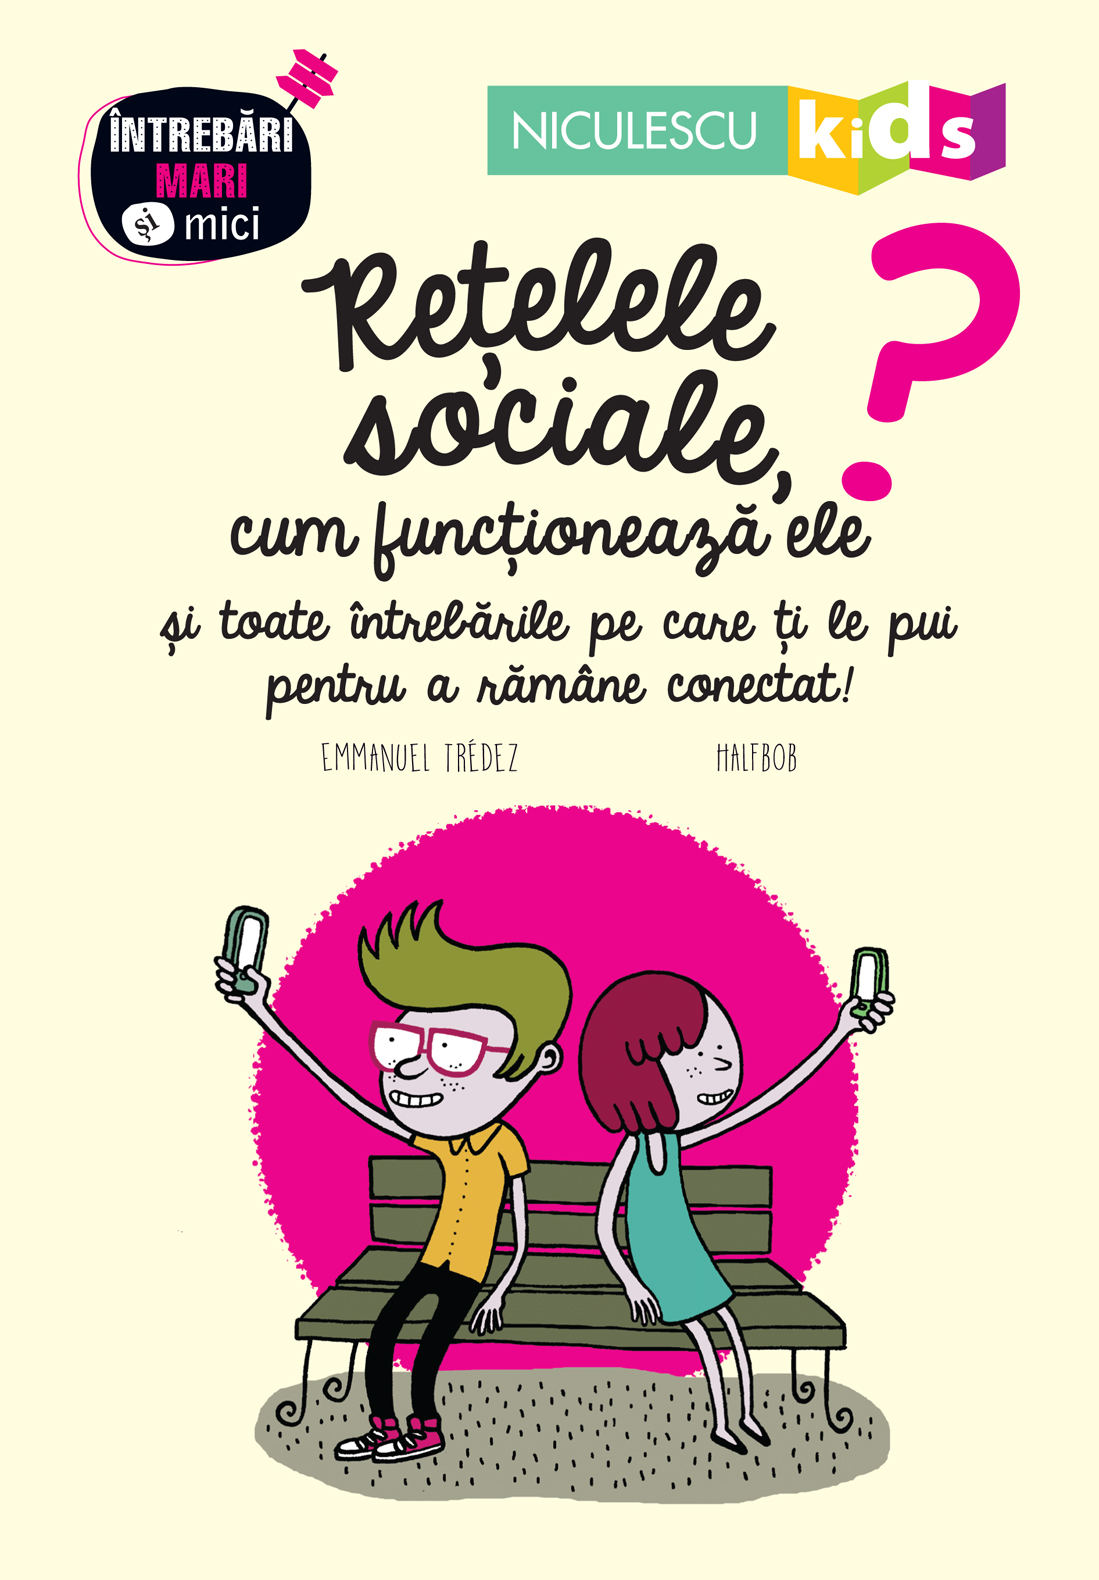 Retelele sociale, cum functioneaza ele? | carturesti.ro